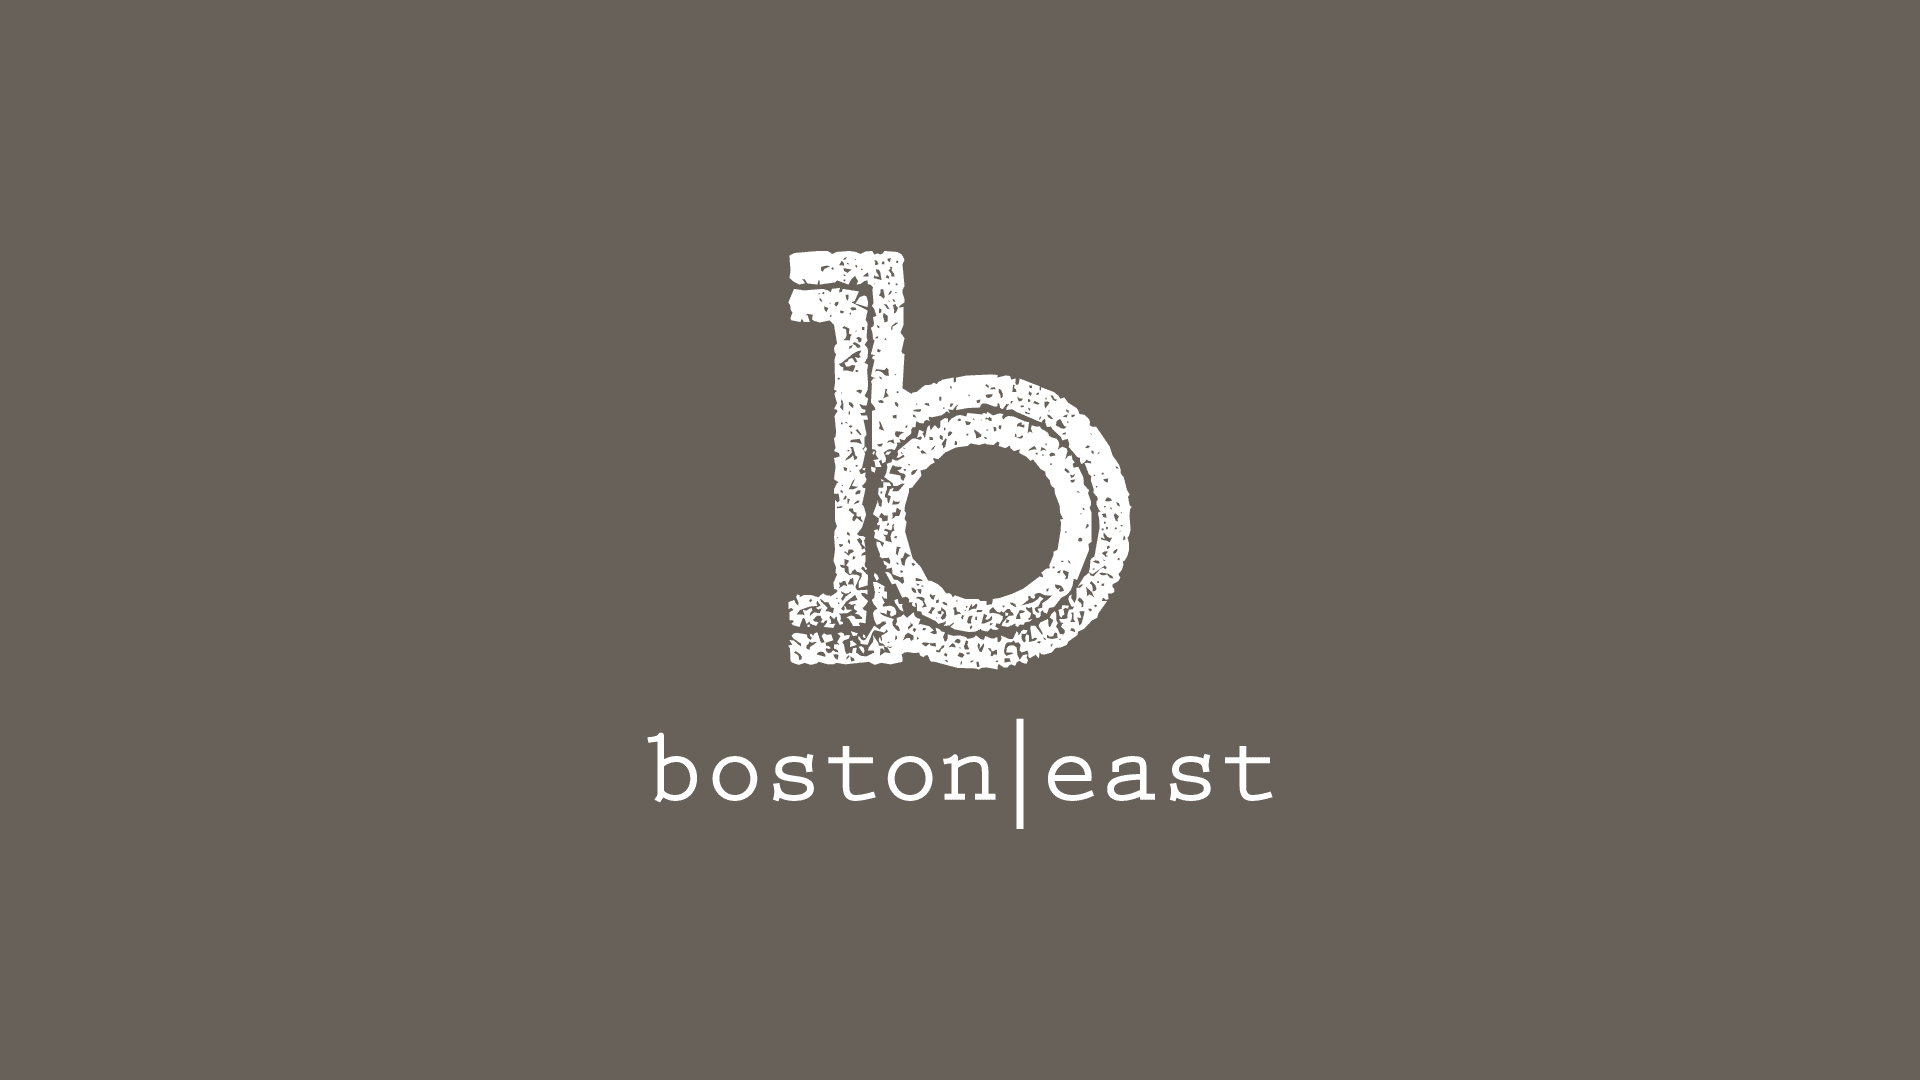 Boston East logo on gray background